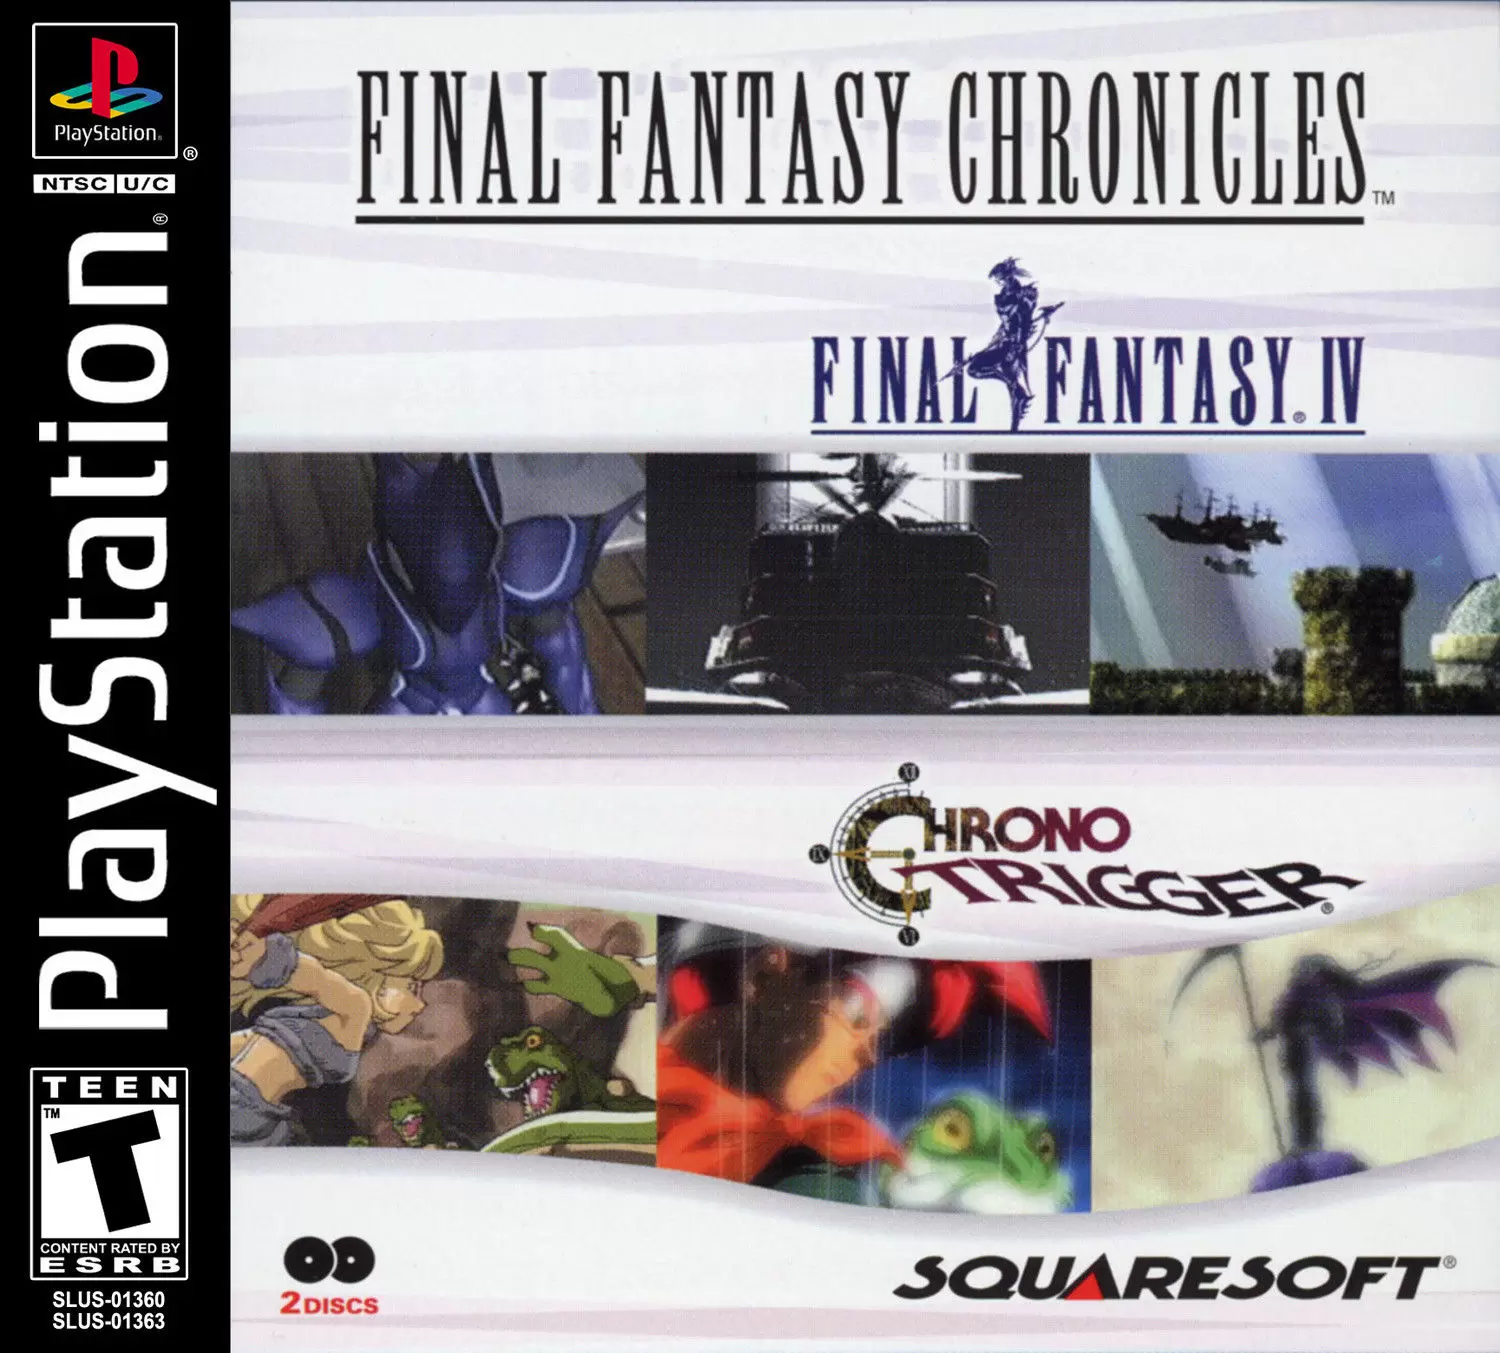 Playstation games - Final Fantasy Chronicles